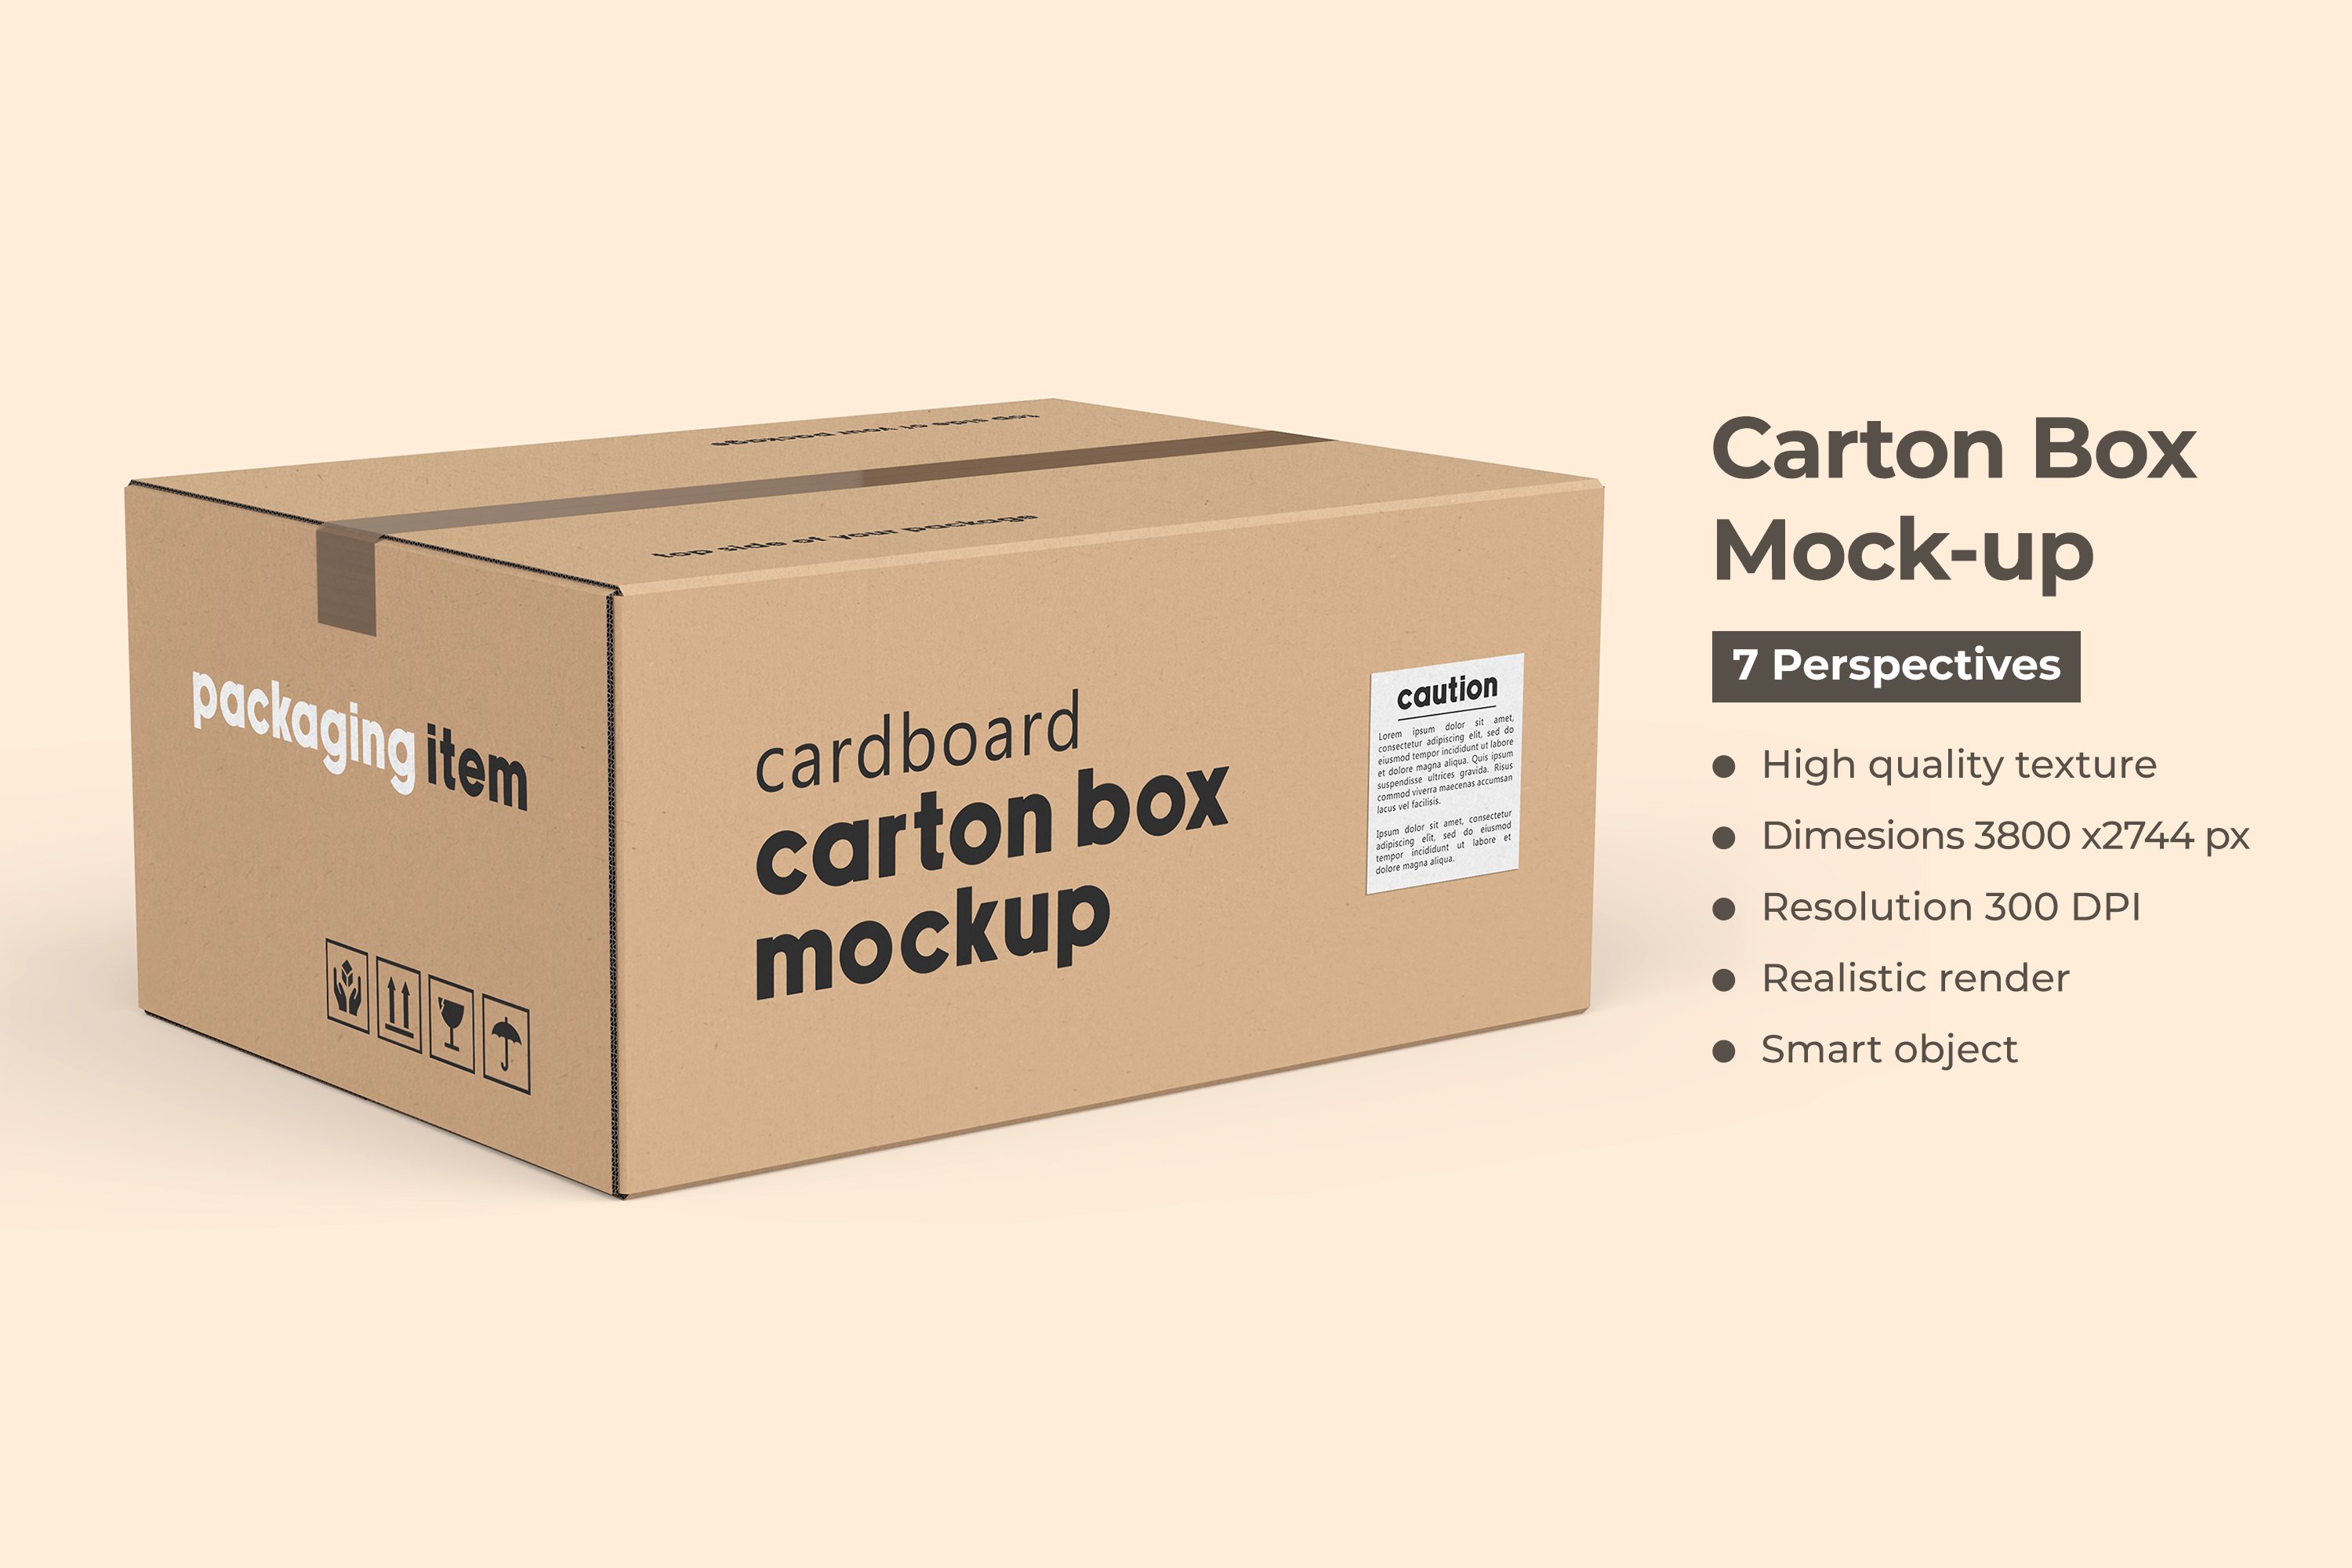 Rectangle Carton Box Mockup cover image.